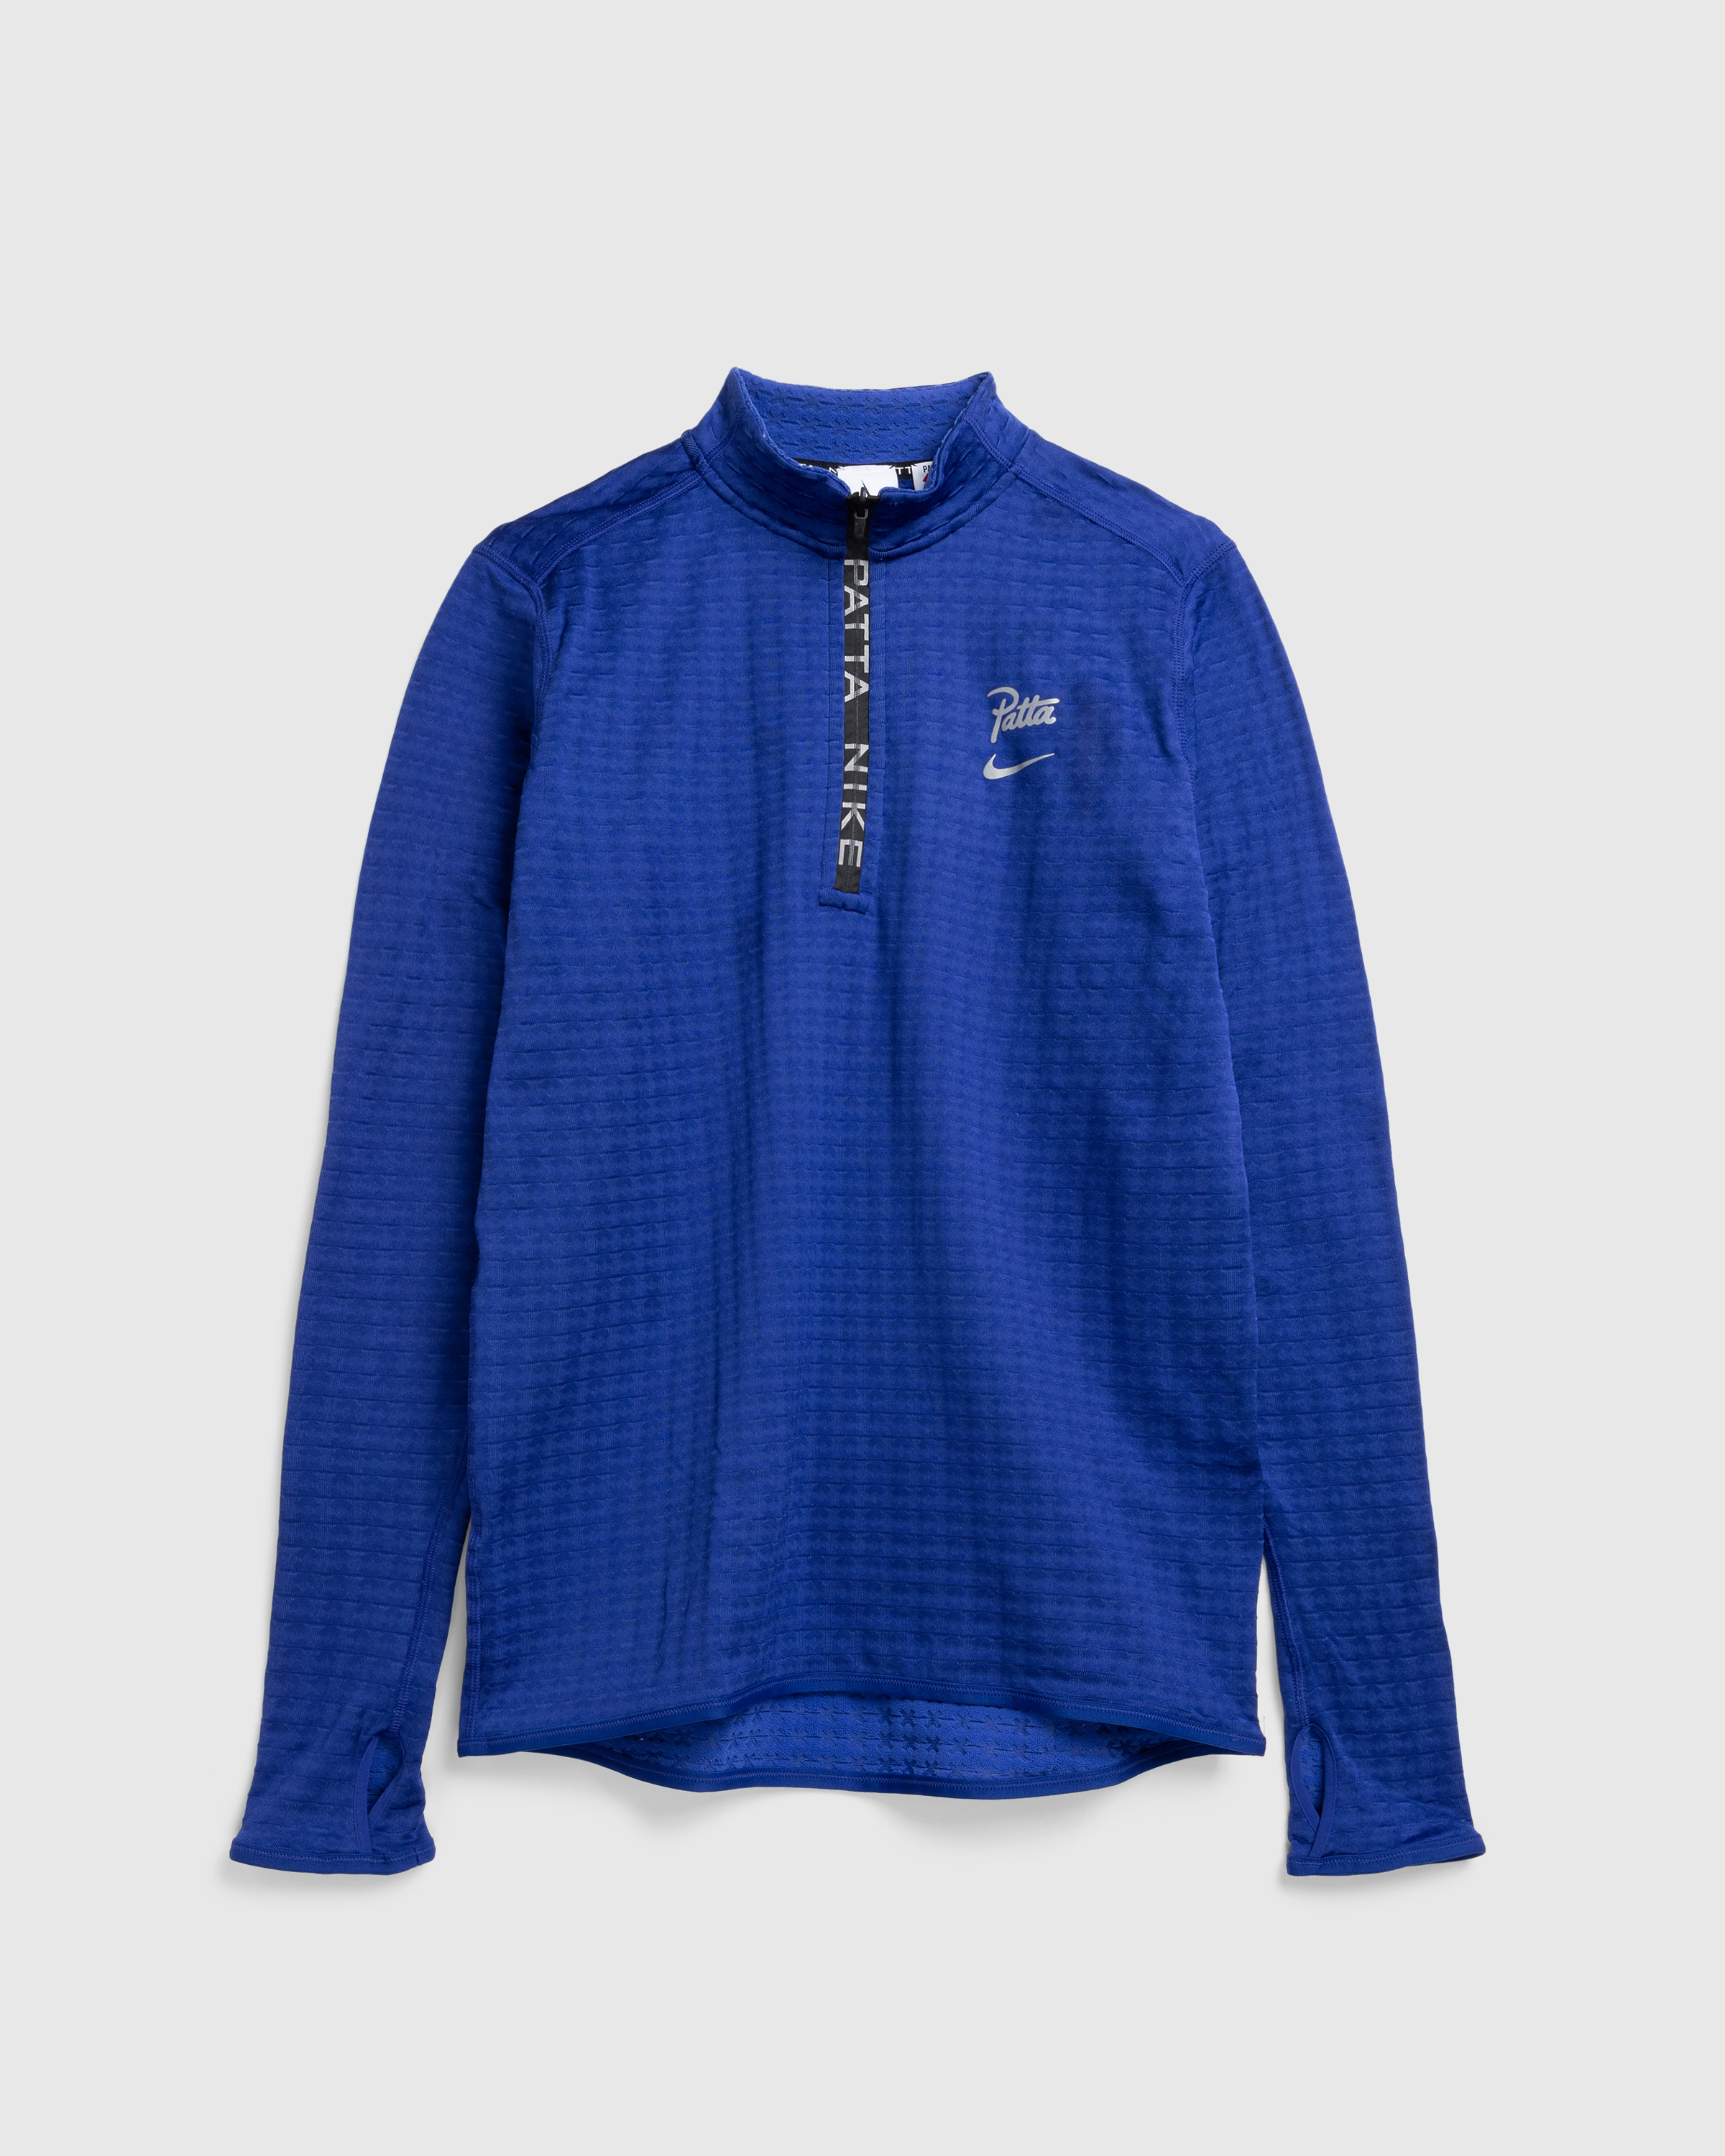 Nike x Patta – Half-Zip Long-Sleeve Top Deep Royal Blue - Zip-Ups - Blue - Image 1